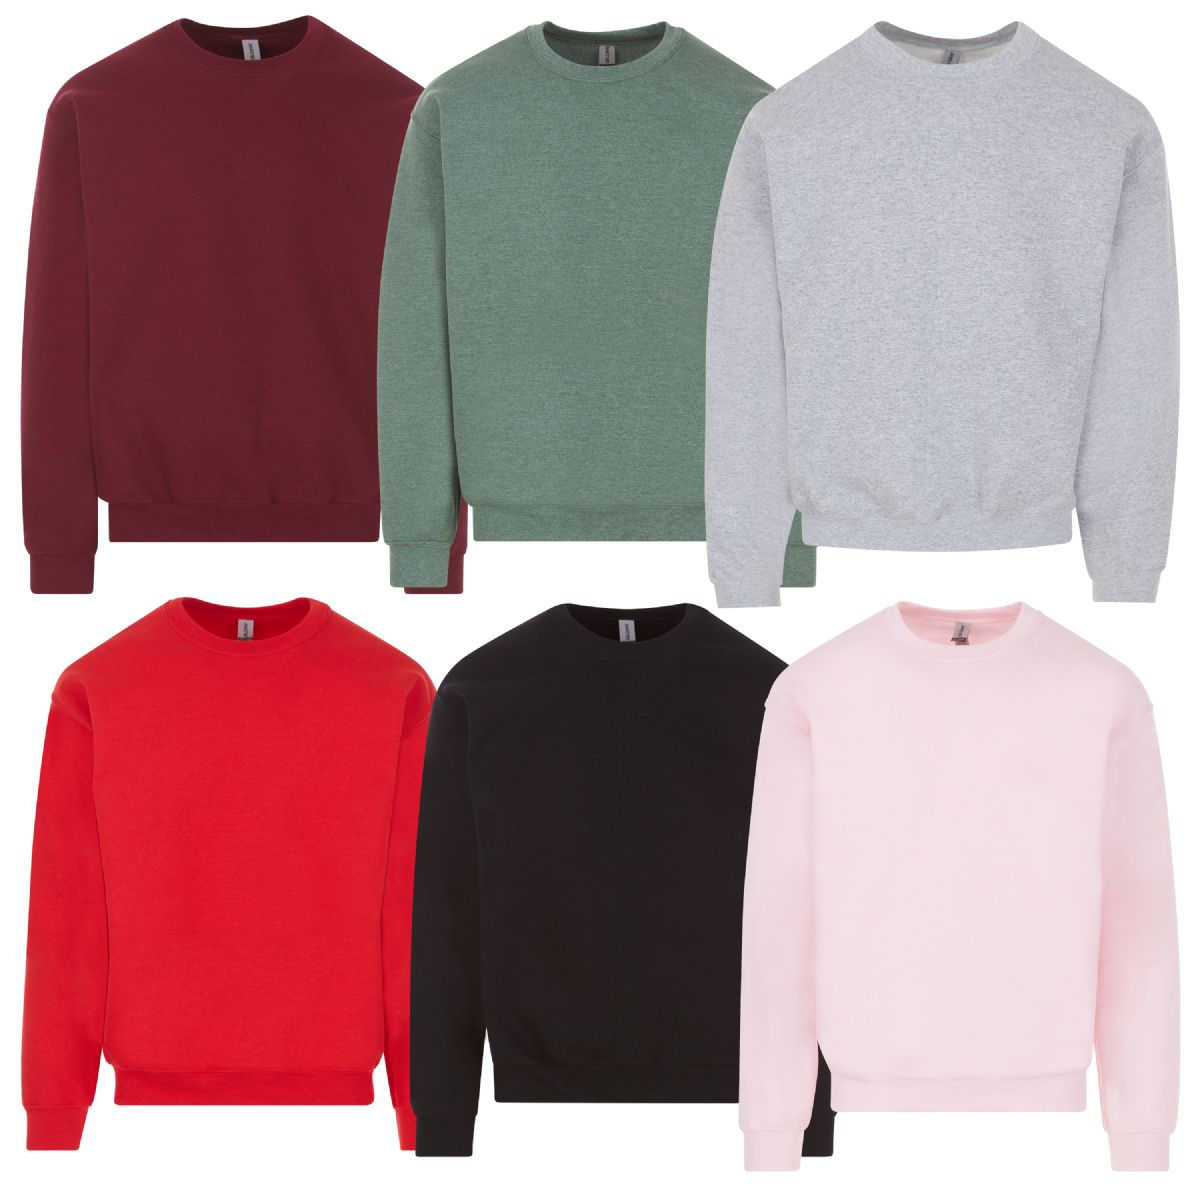 216 Bulk Gildan Unisex Assorted Colors Fleece Sweat Shirts Size Medium